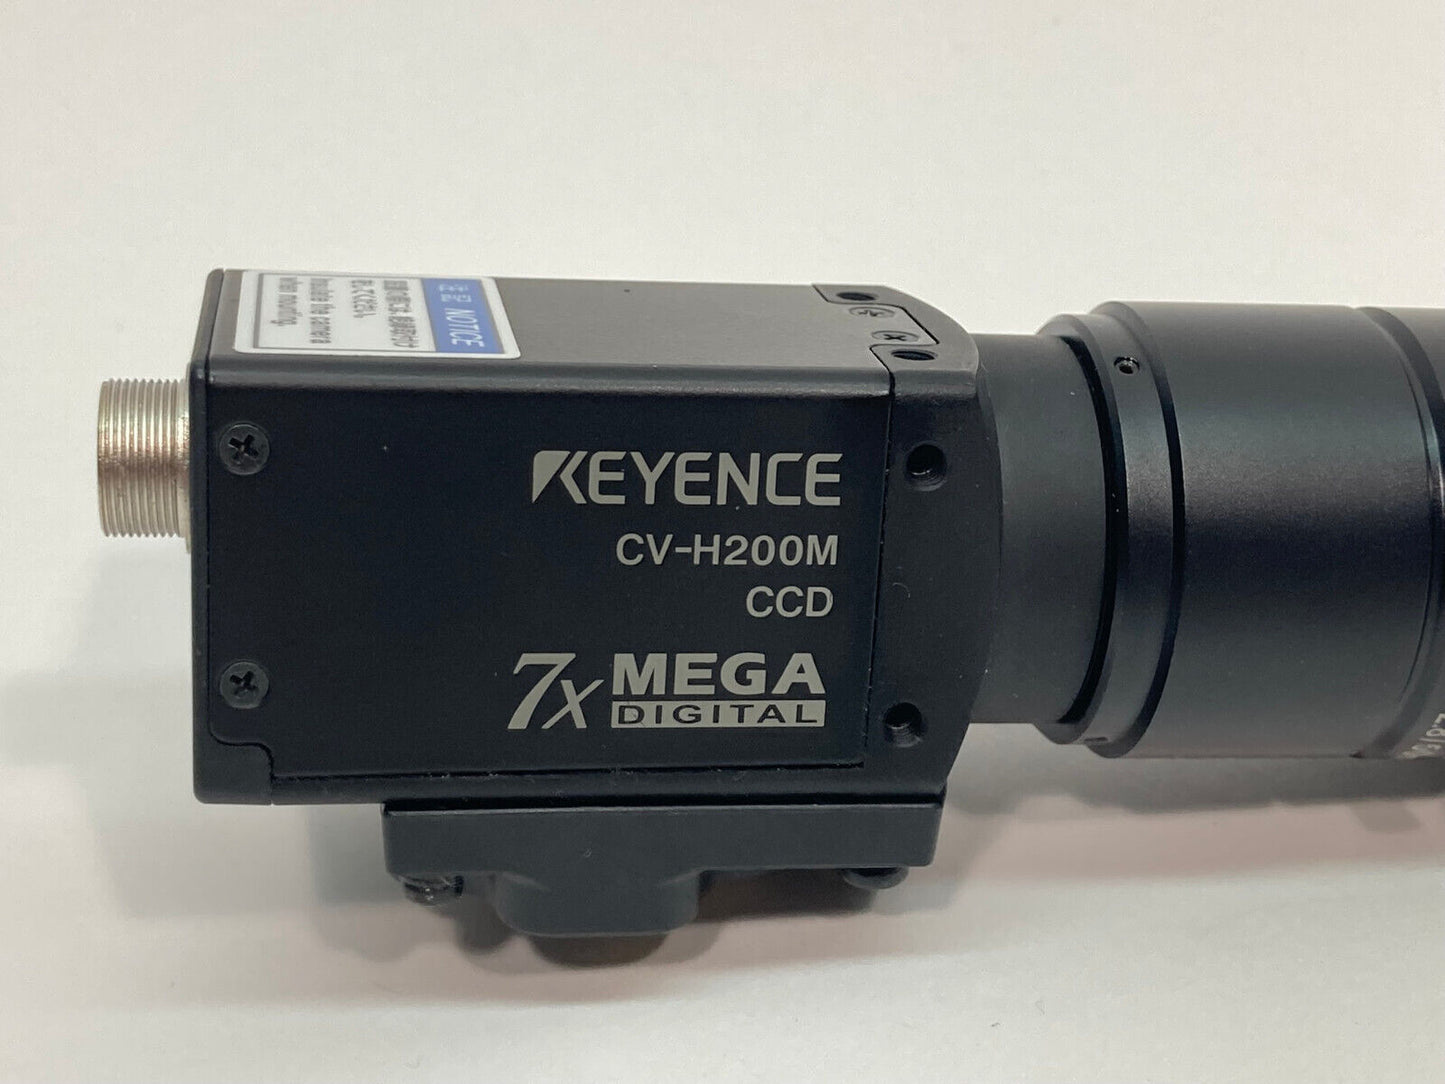 New Keyence CV-H200M Camera,  7X Mega Digital w/ F2.8/50MM Lens